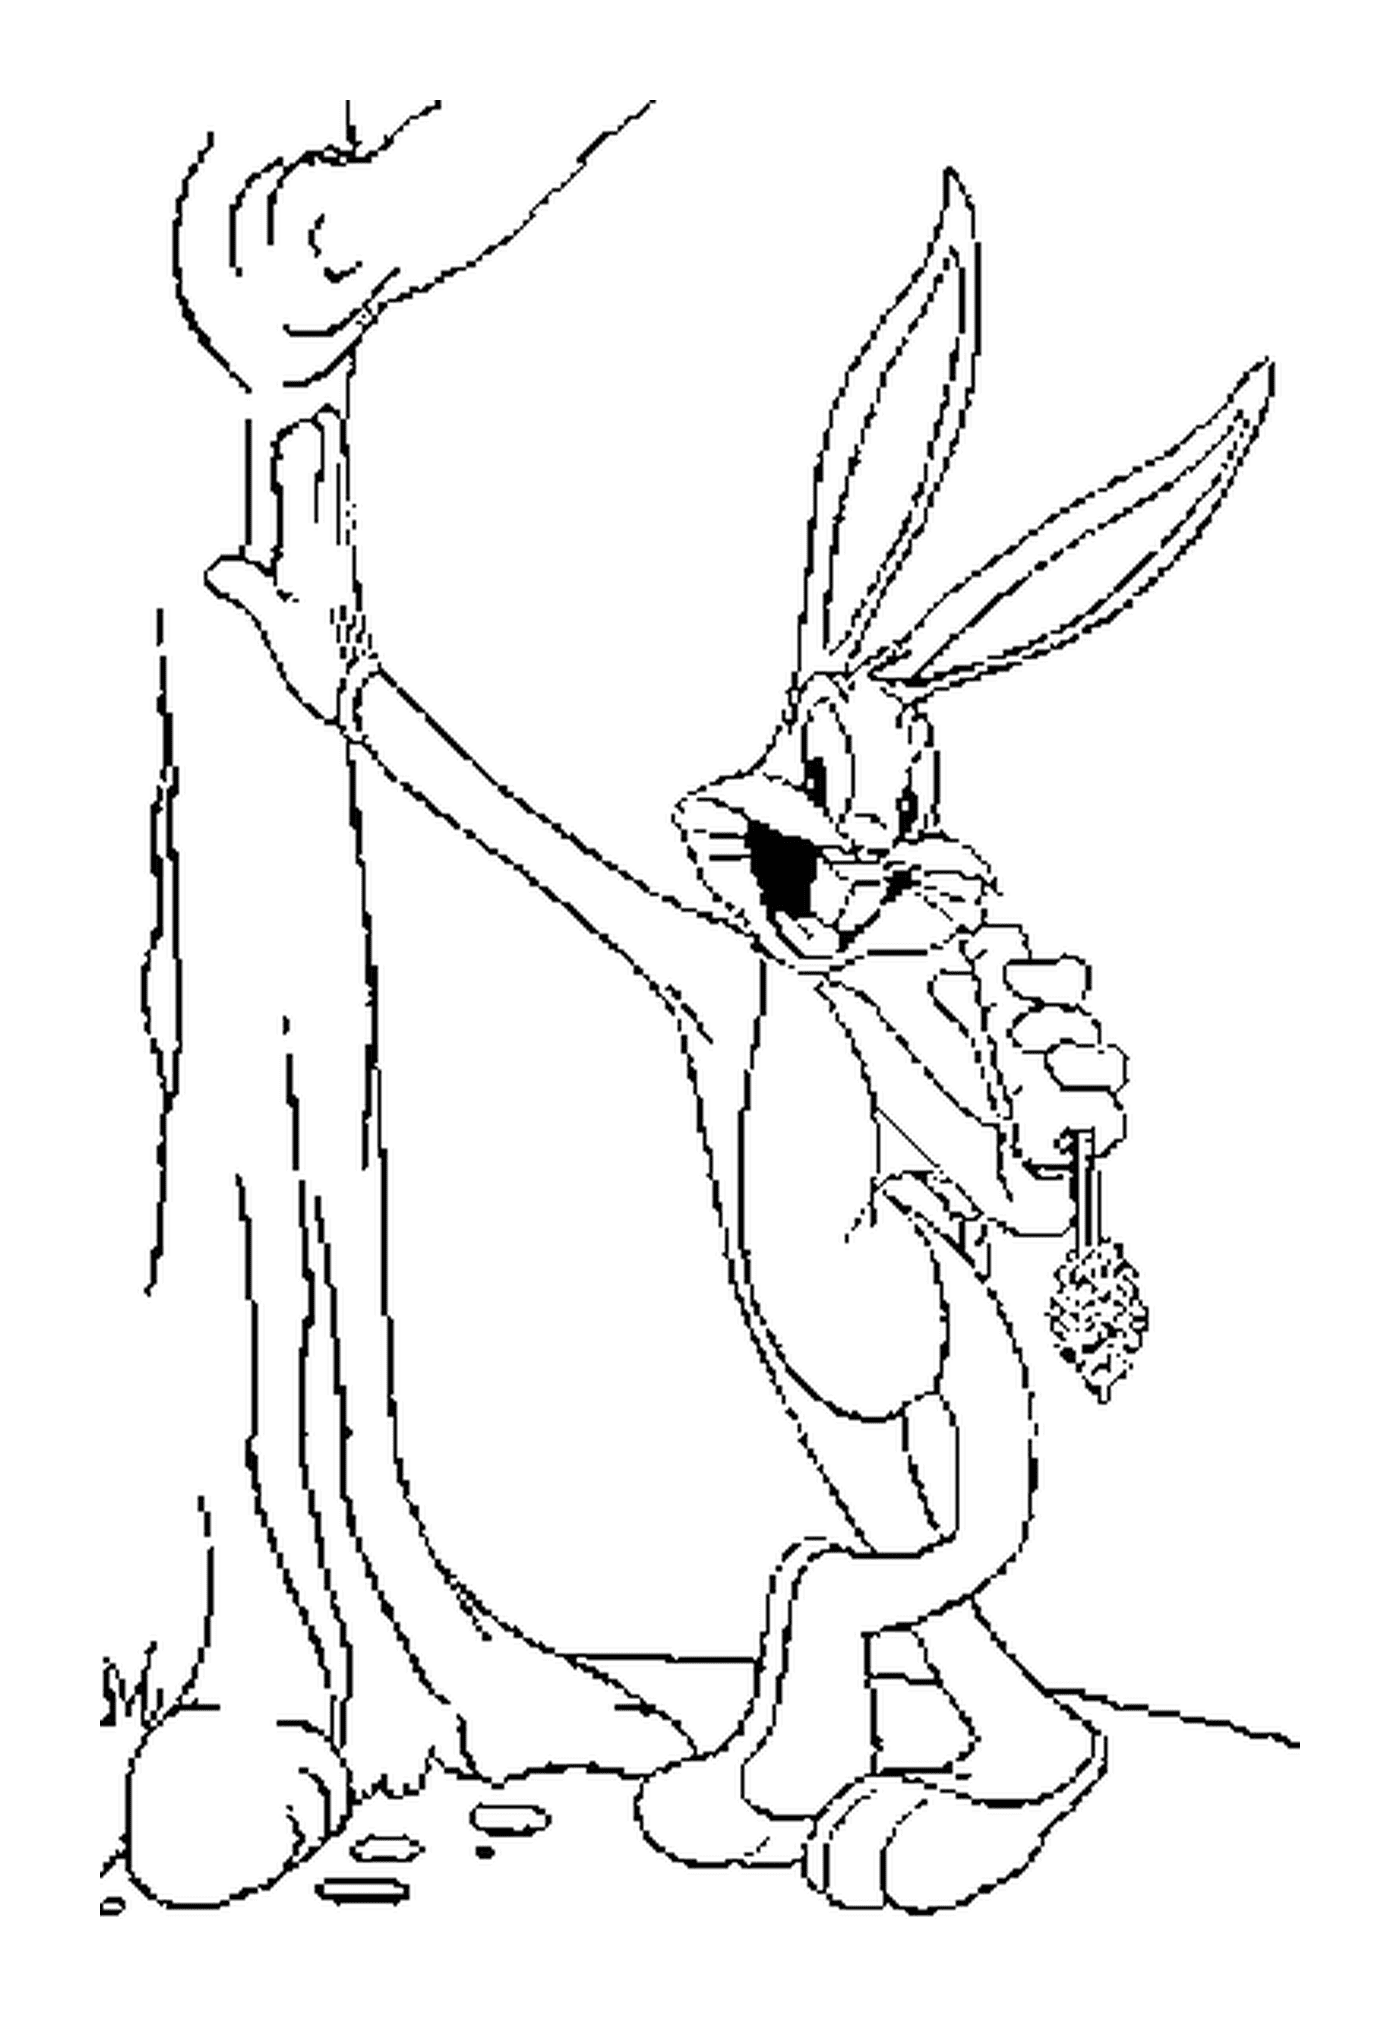  Bugs Bunny mangia una carota da un albero 